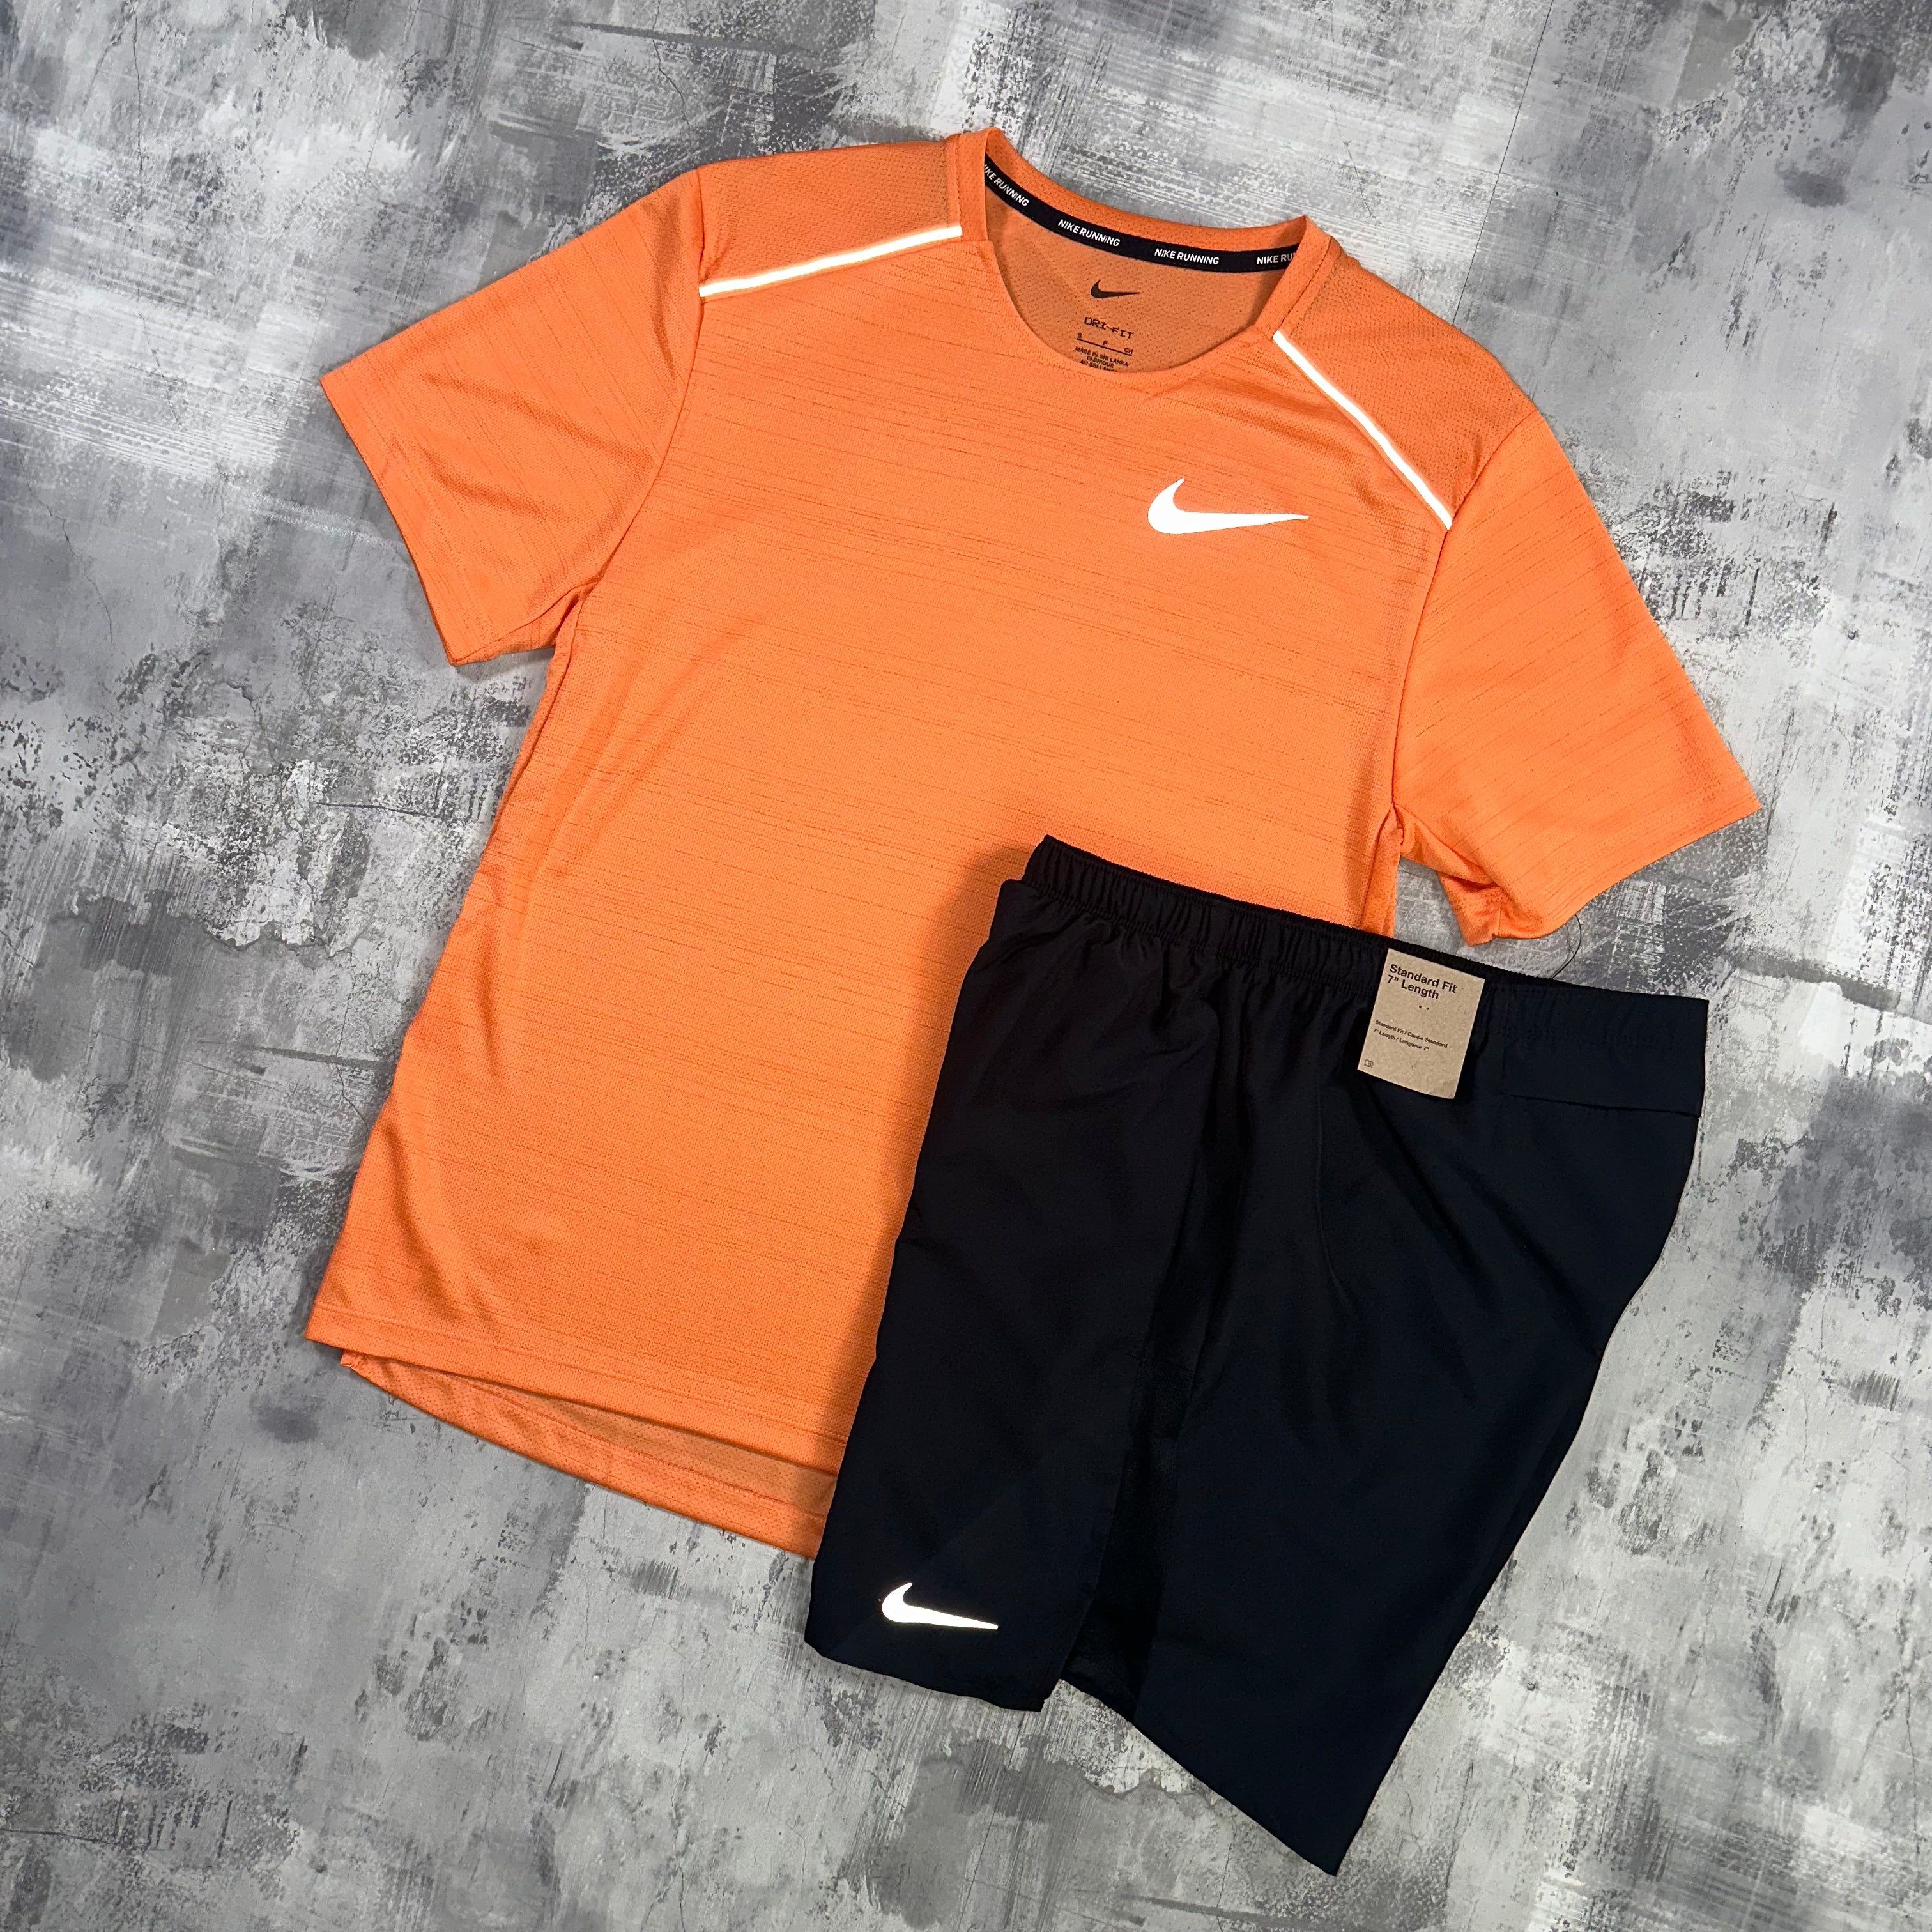 Nike Miler set Orange - t-shirt and shorts